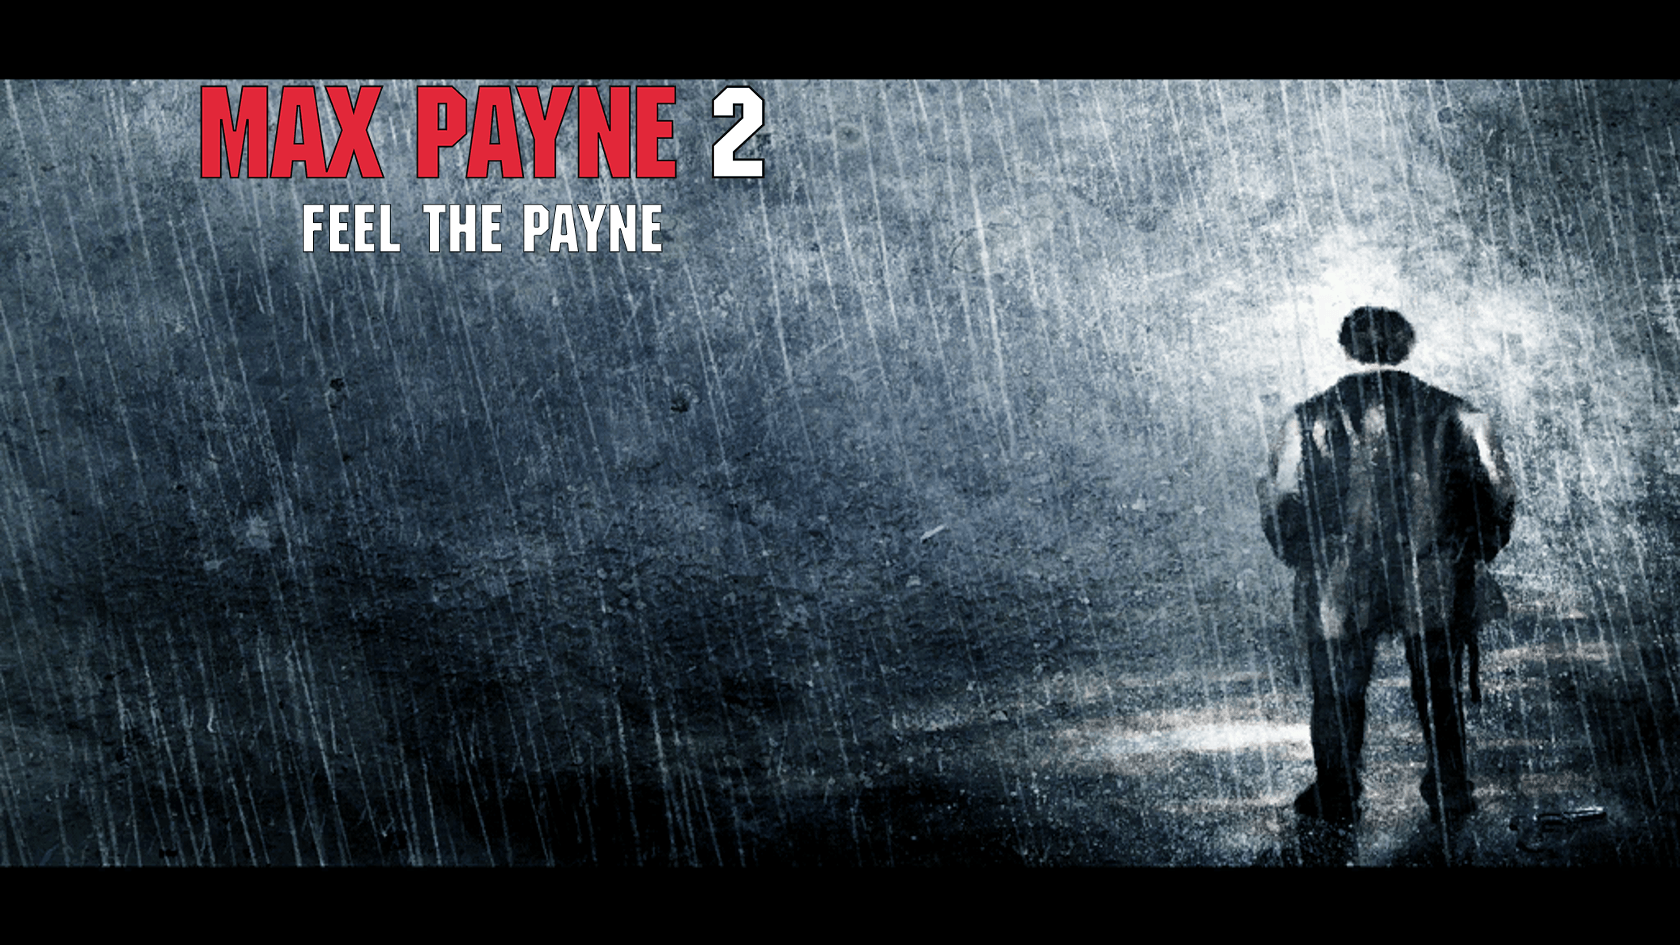 Max Payne 2 The Payne (EN DE) Beta V1.5 File